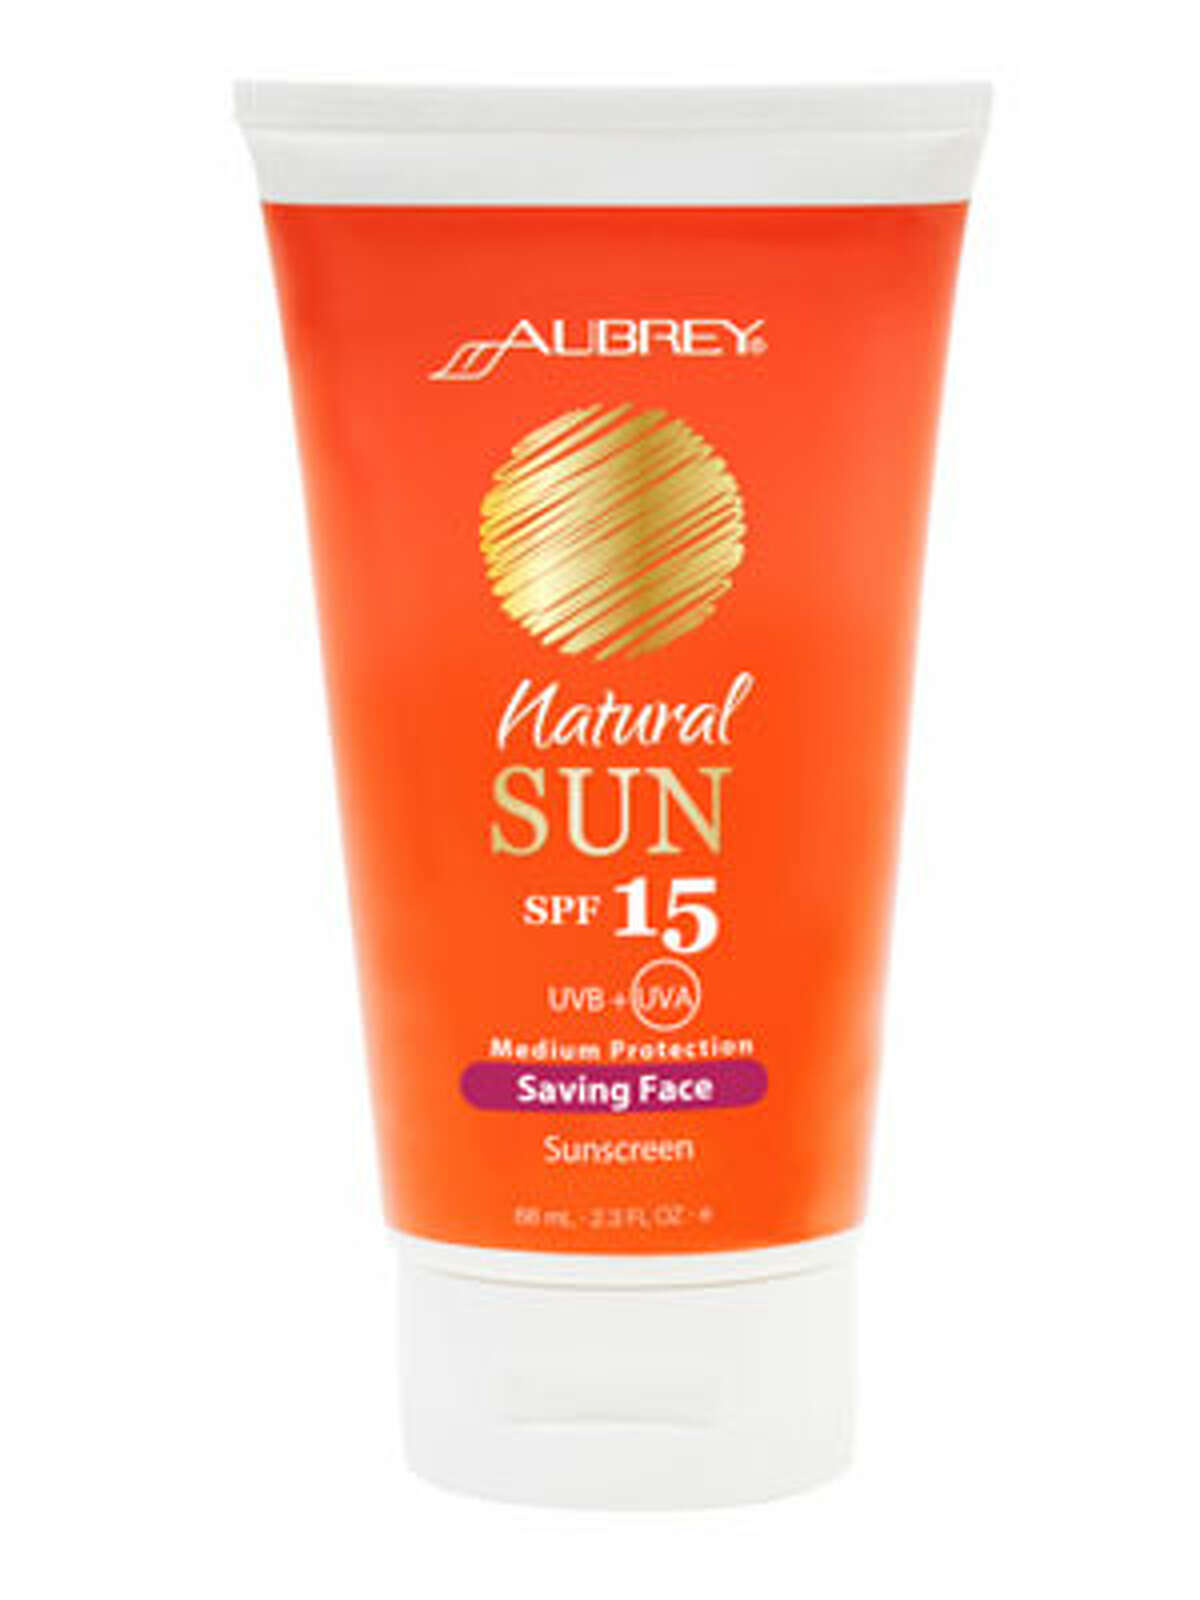 vanicream sunscreen sensitive